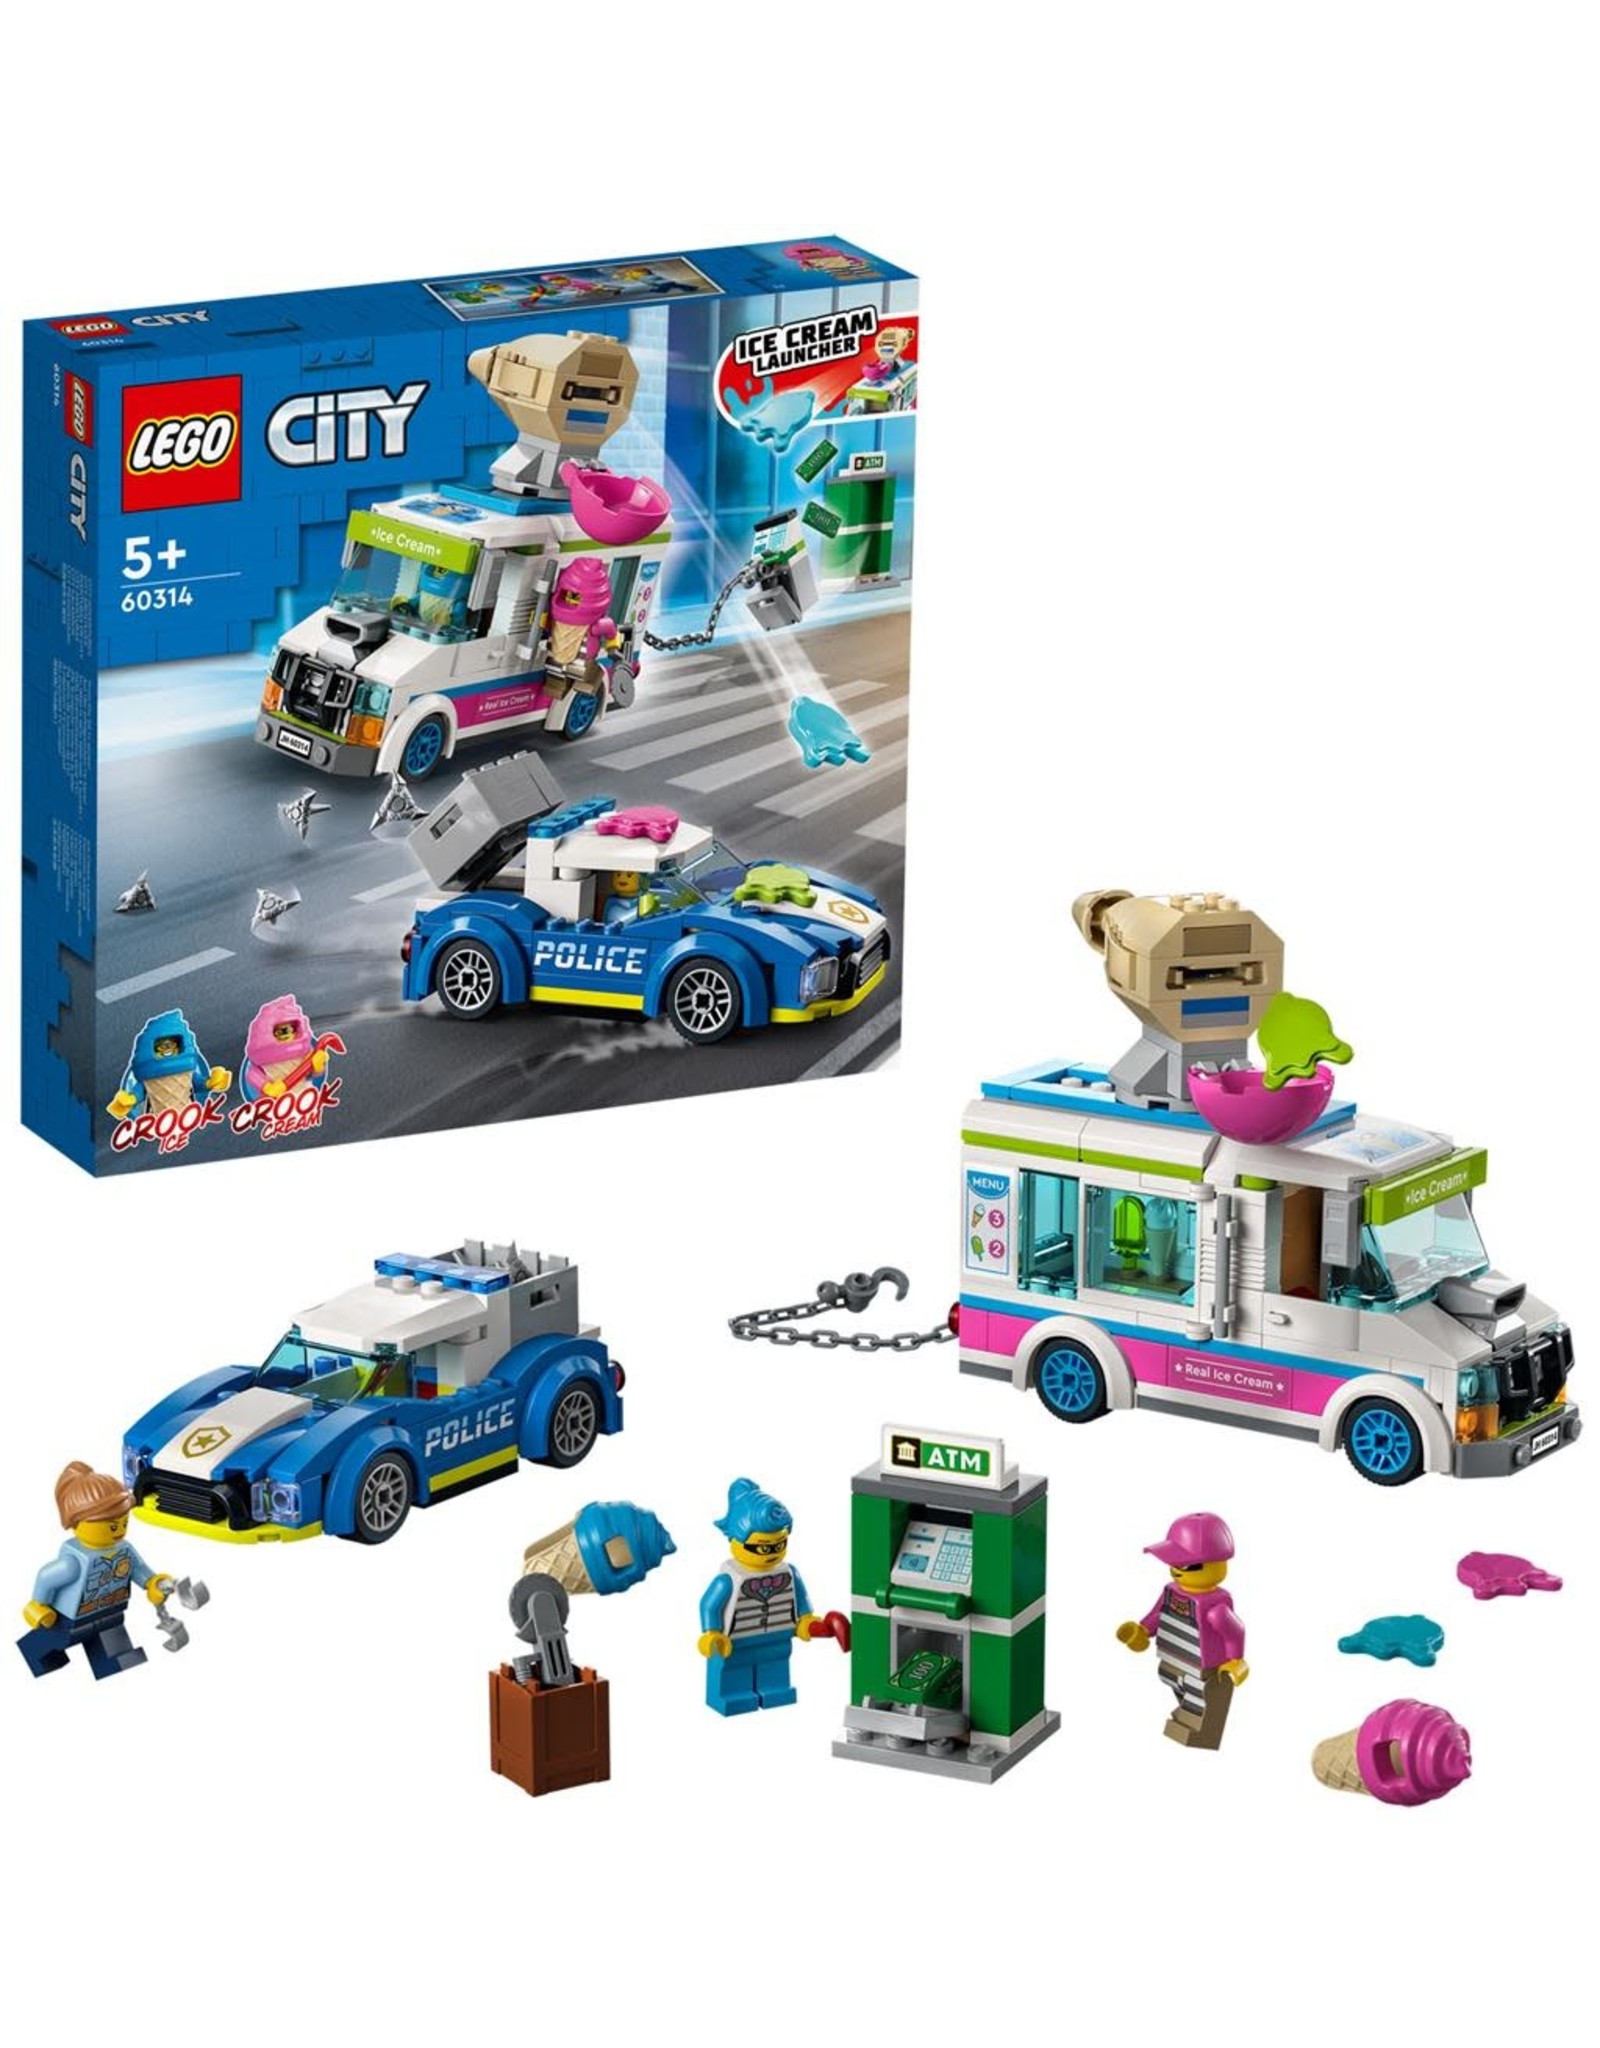 LEGO Lego City 60314 Ijswagen Politieachtervolging –  Police lcecream Truck Police Chase